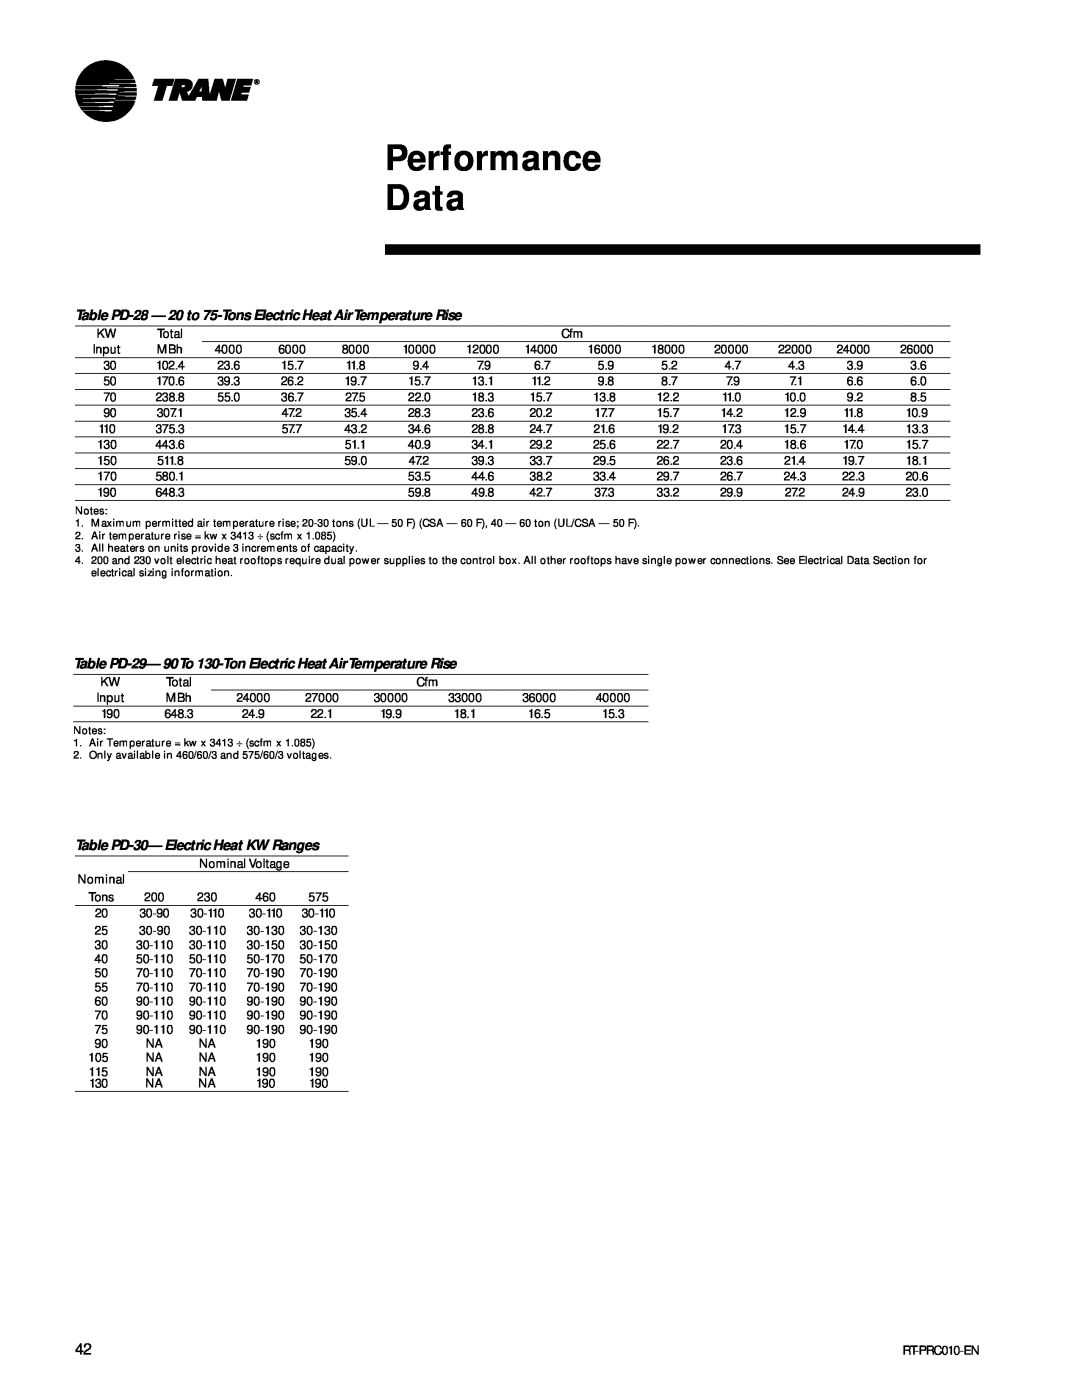 Trane RT-PRC010-EN manual Performance Data, Table PD-30—Electric Heat KW Ranges 